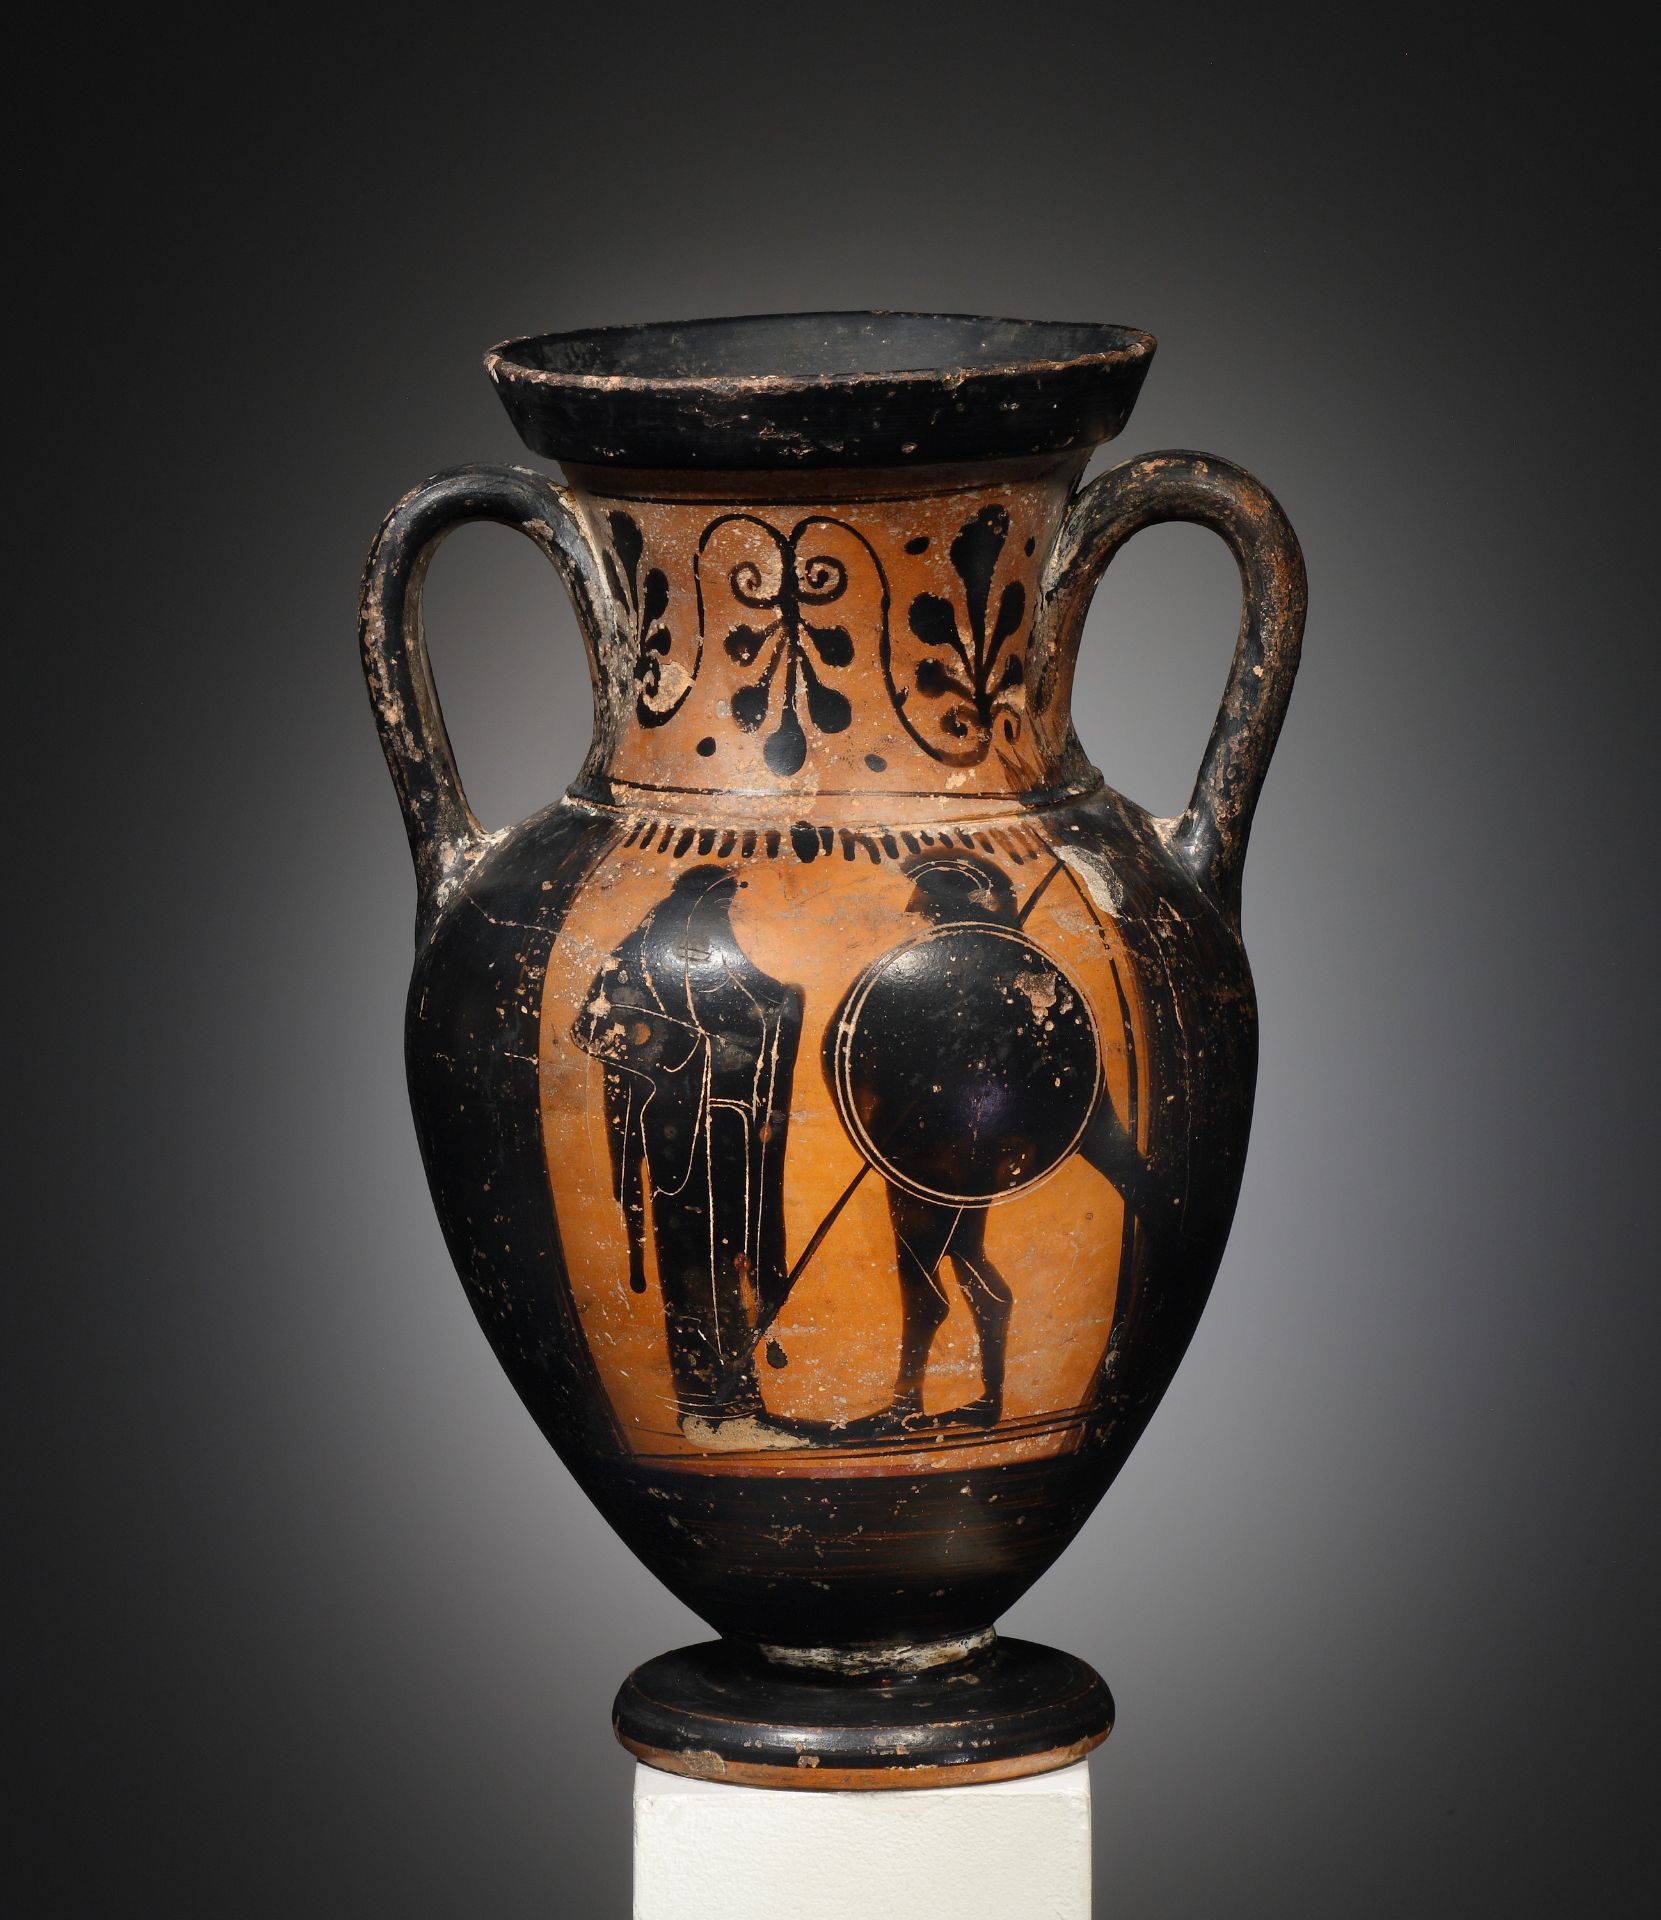 An Attic Black-Figure Amphora with Departure Scenes